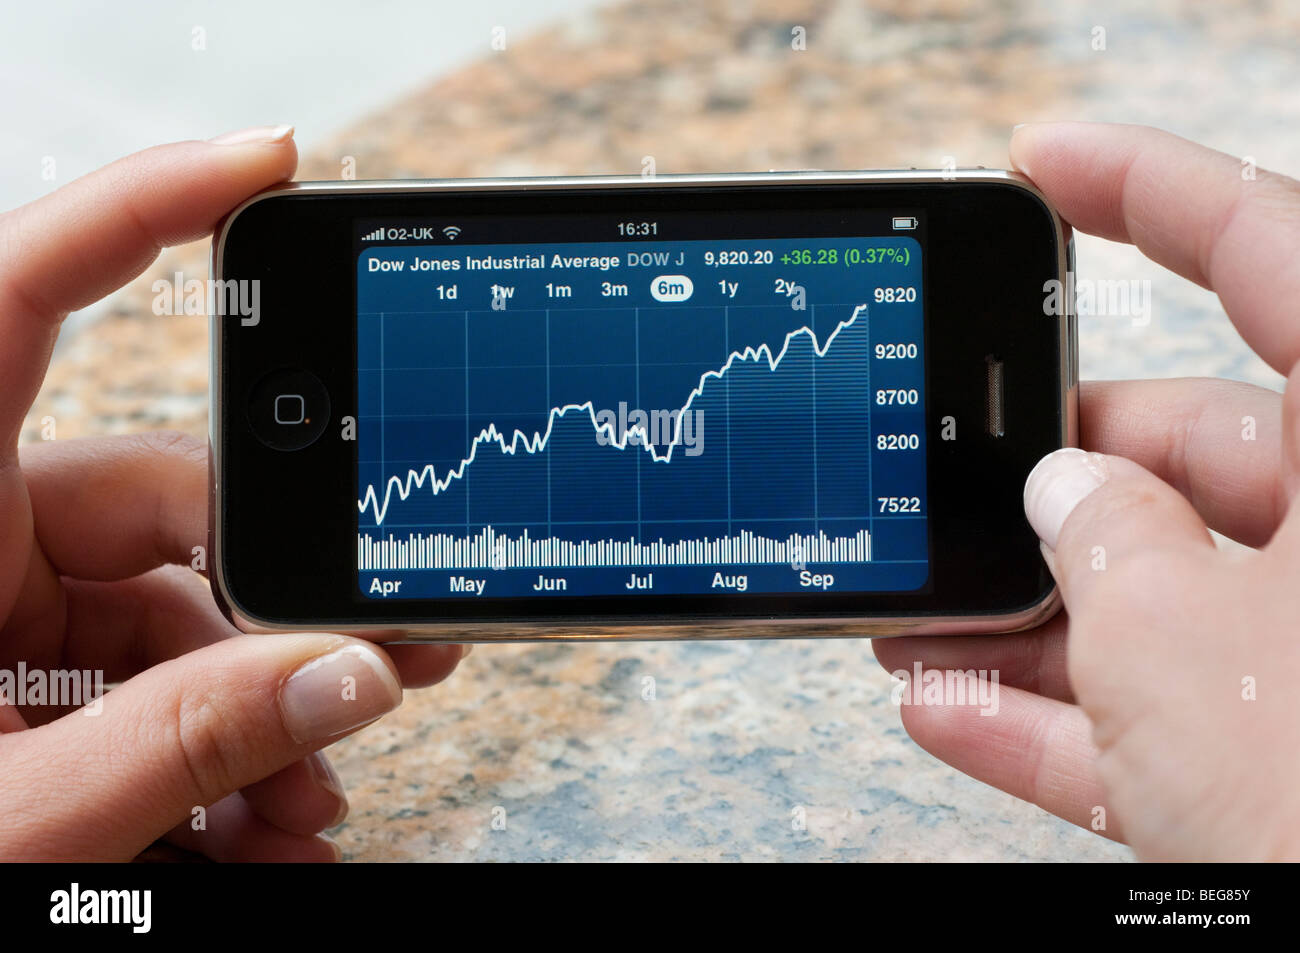 Dow Jones Industrial Average share price rises on Apple iPhone Stock Photo